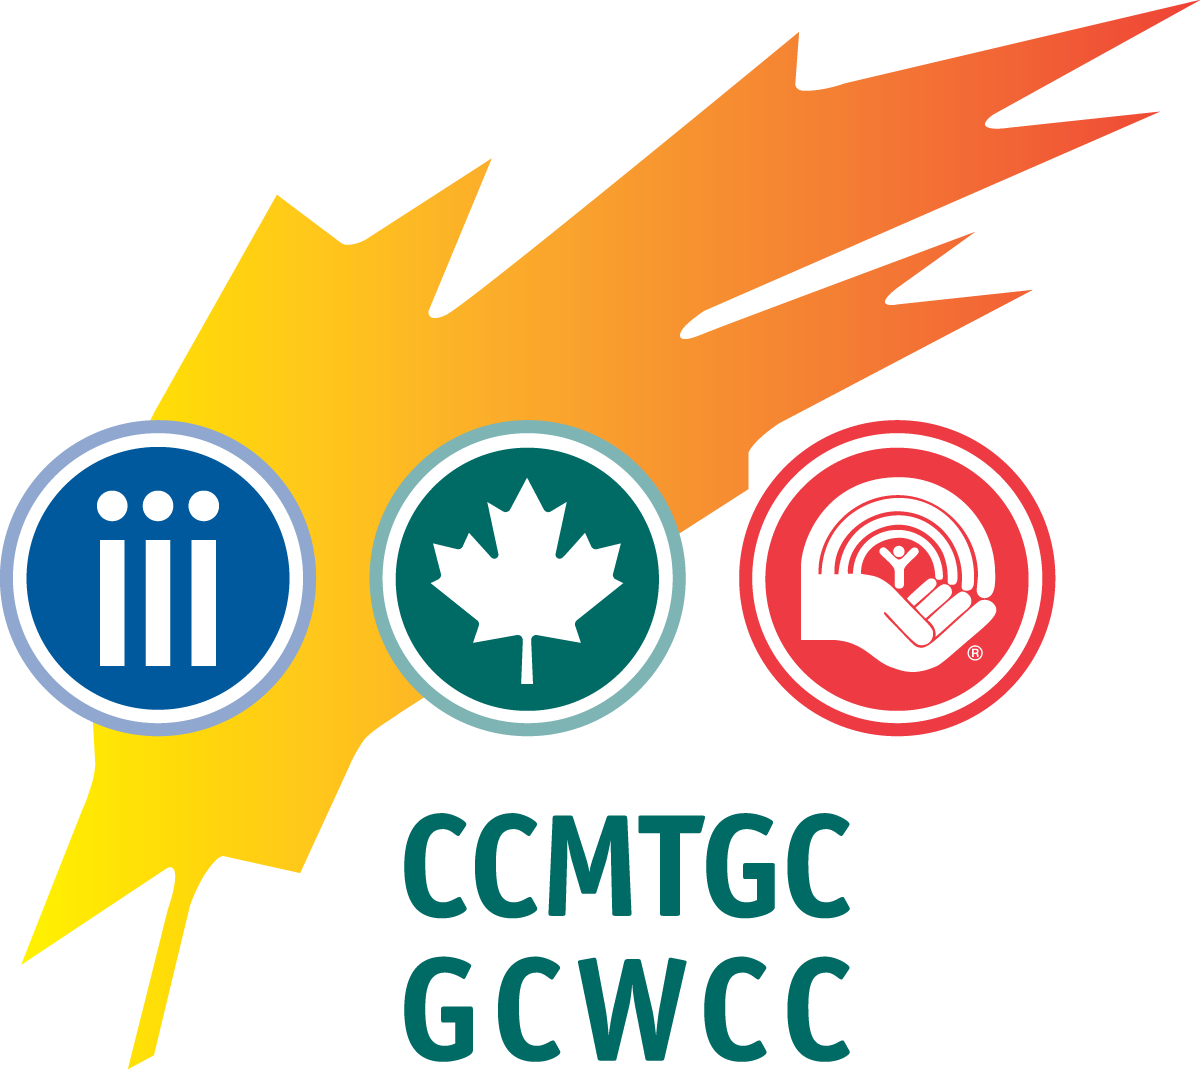 Graphics and Logos | gcwcc-ccmtgc.org